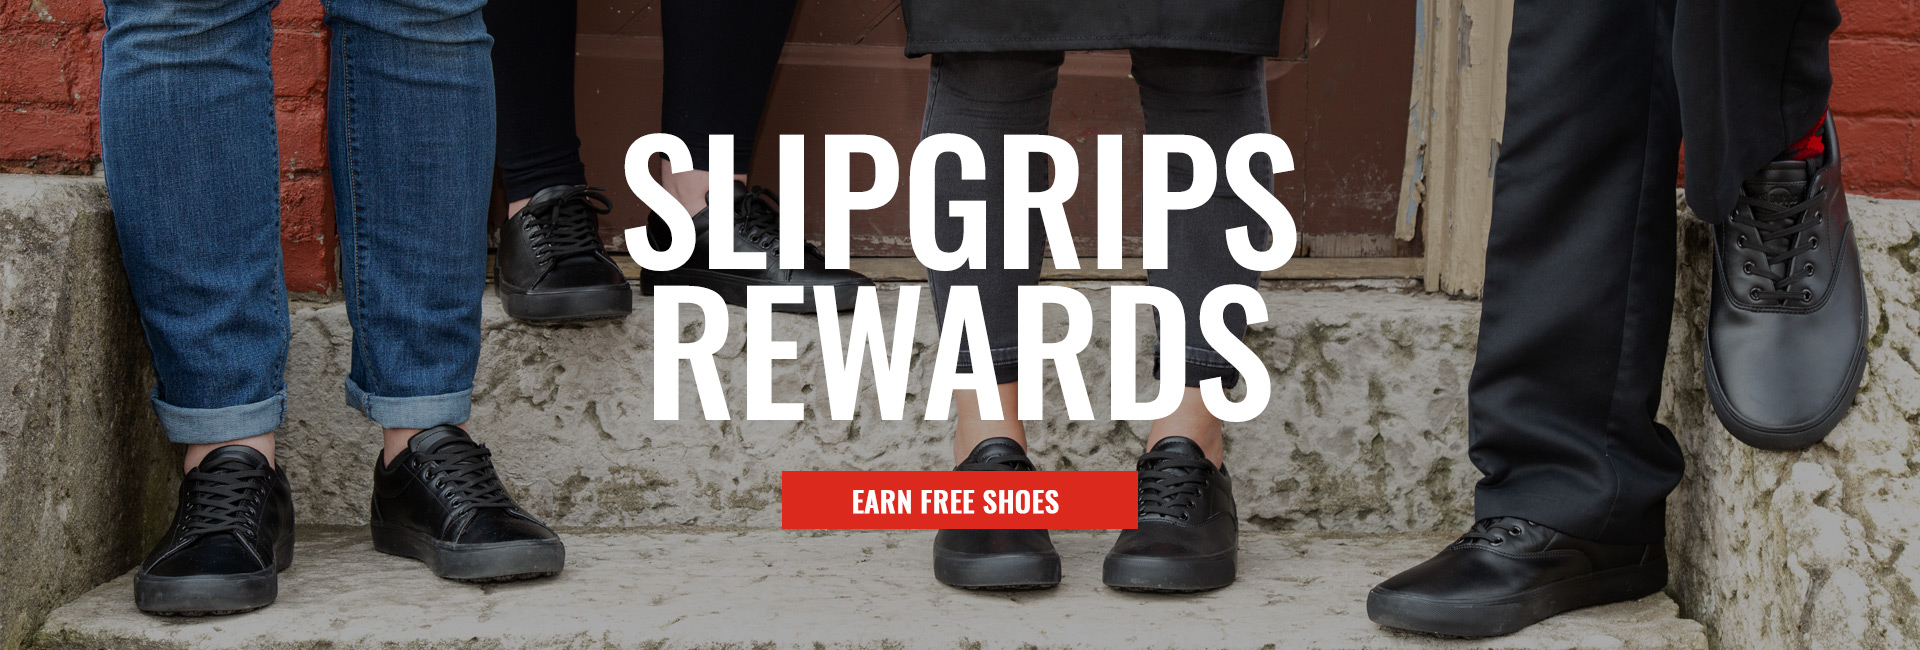 SlipGrips: Slip-Resistant Shoes For Your Non-Slip Work Shoe Needs